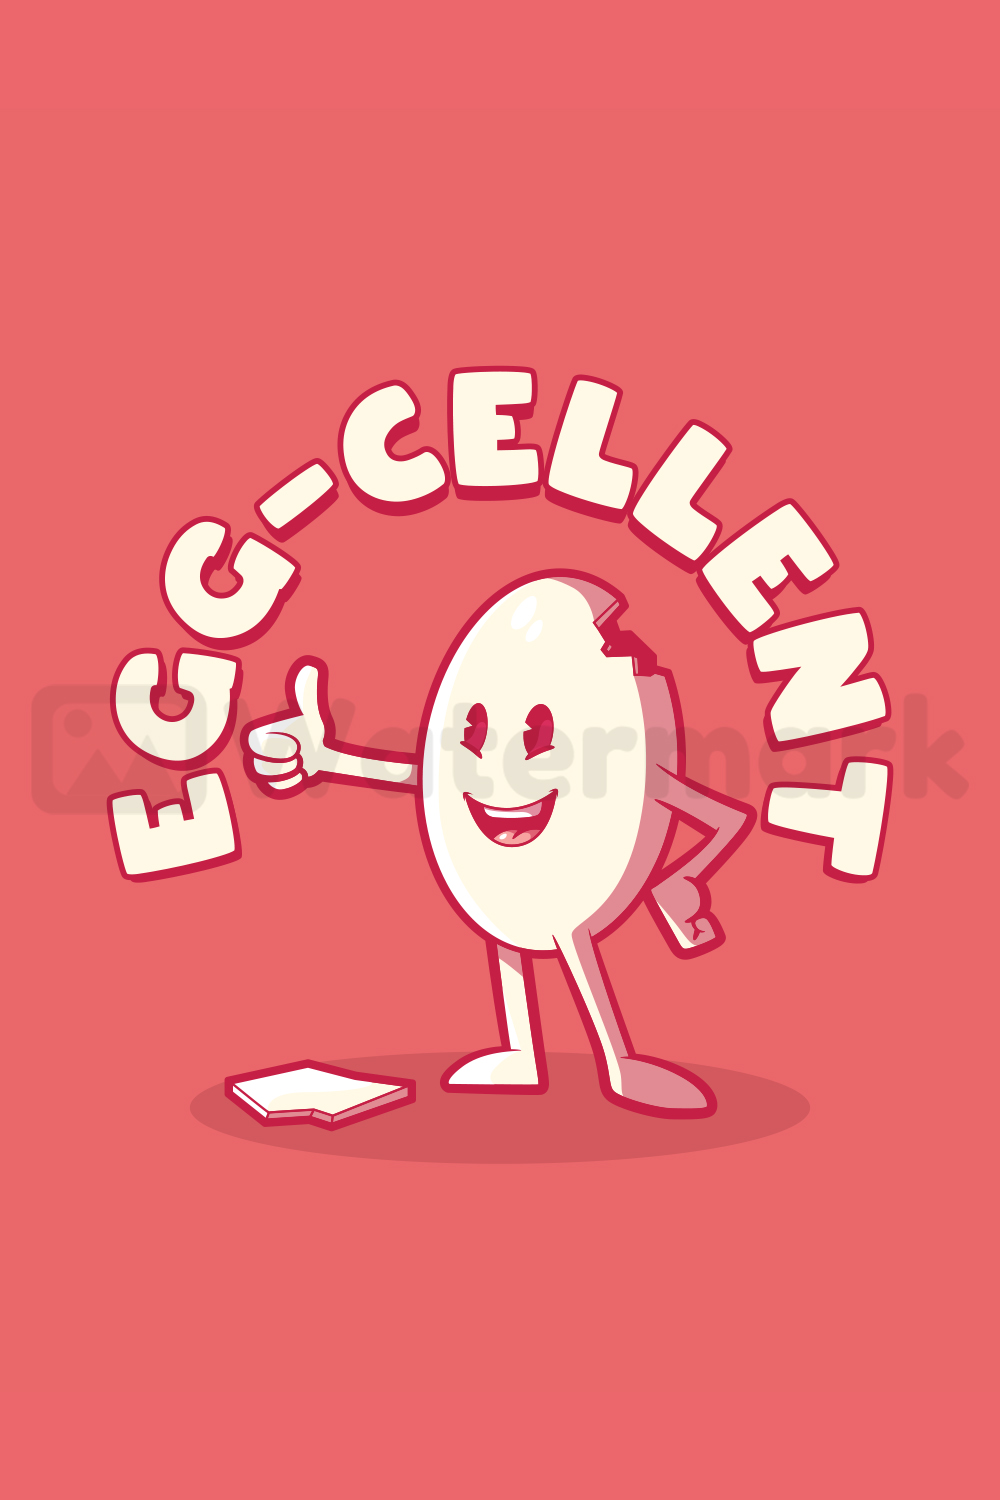 Egg Cellent! pinterest preview image.